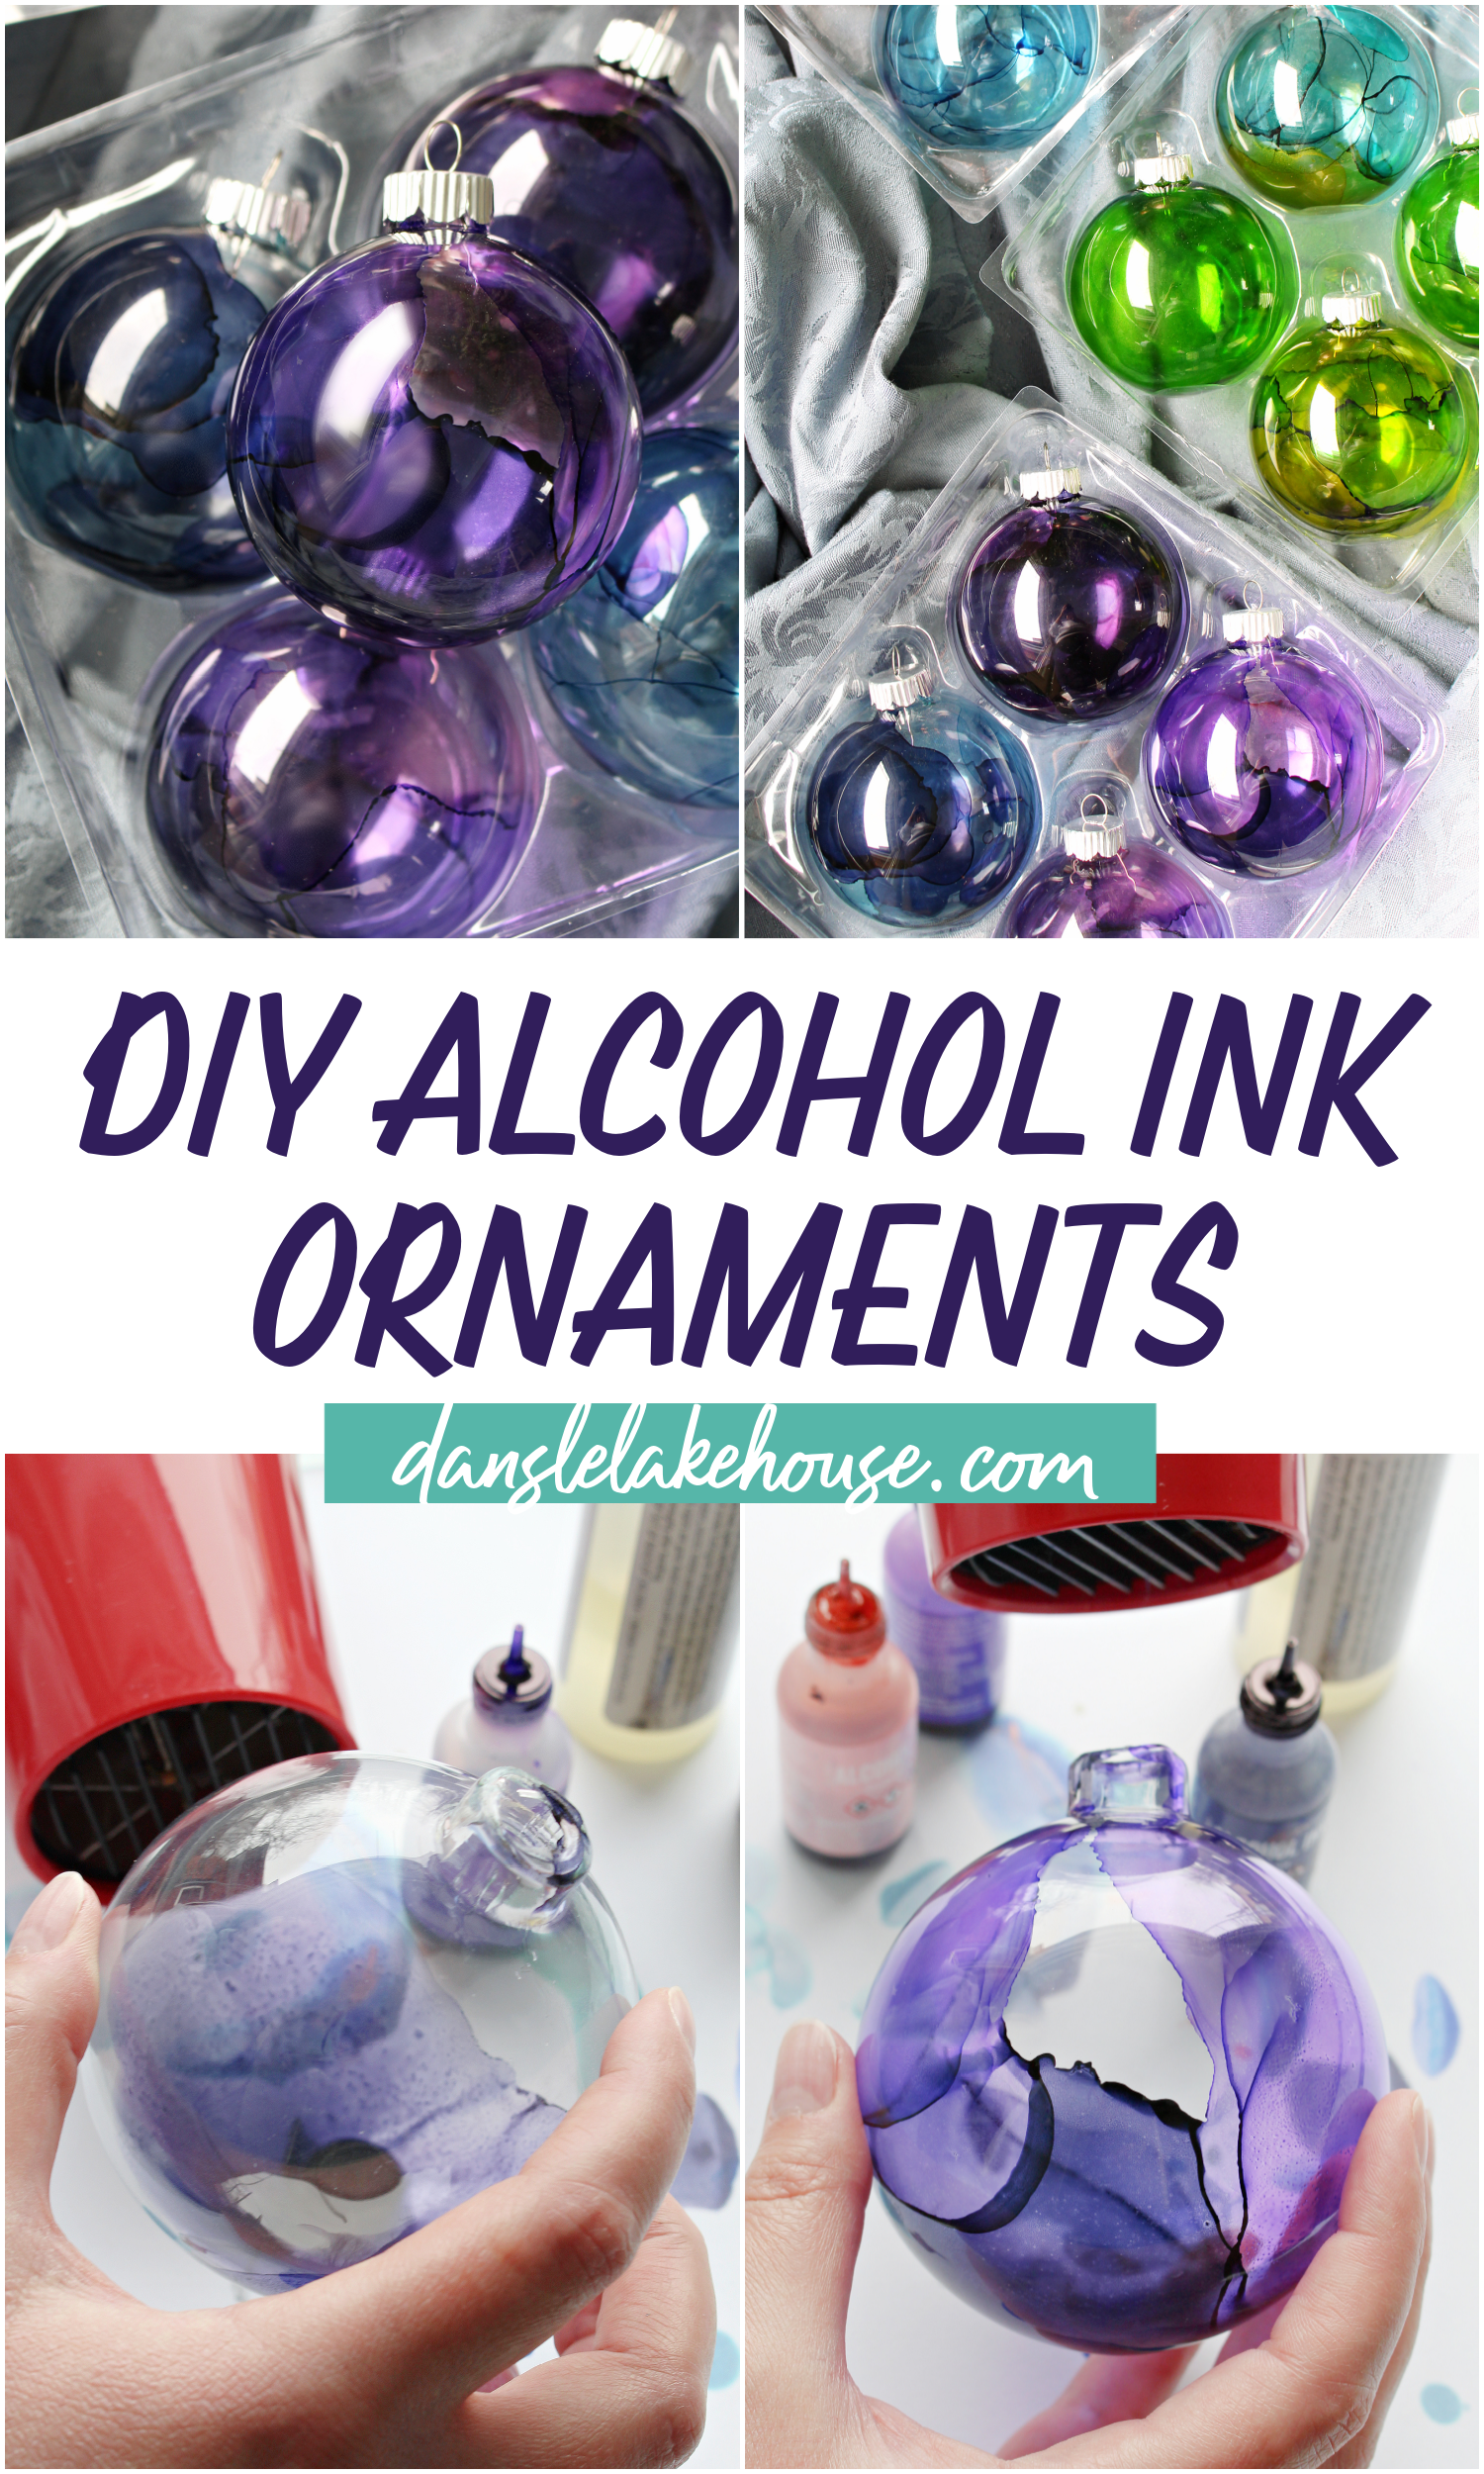 DIY Alcohol Ink Ornaments Tutorial